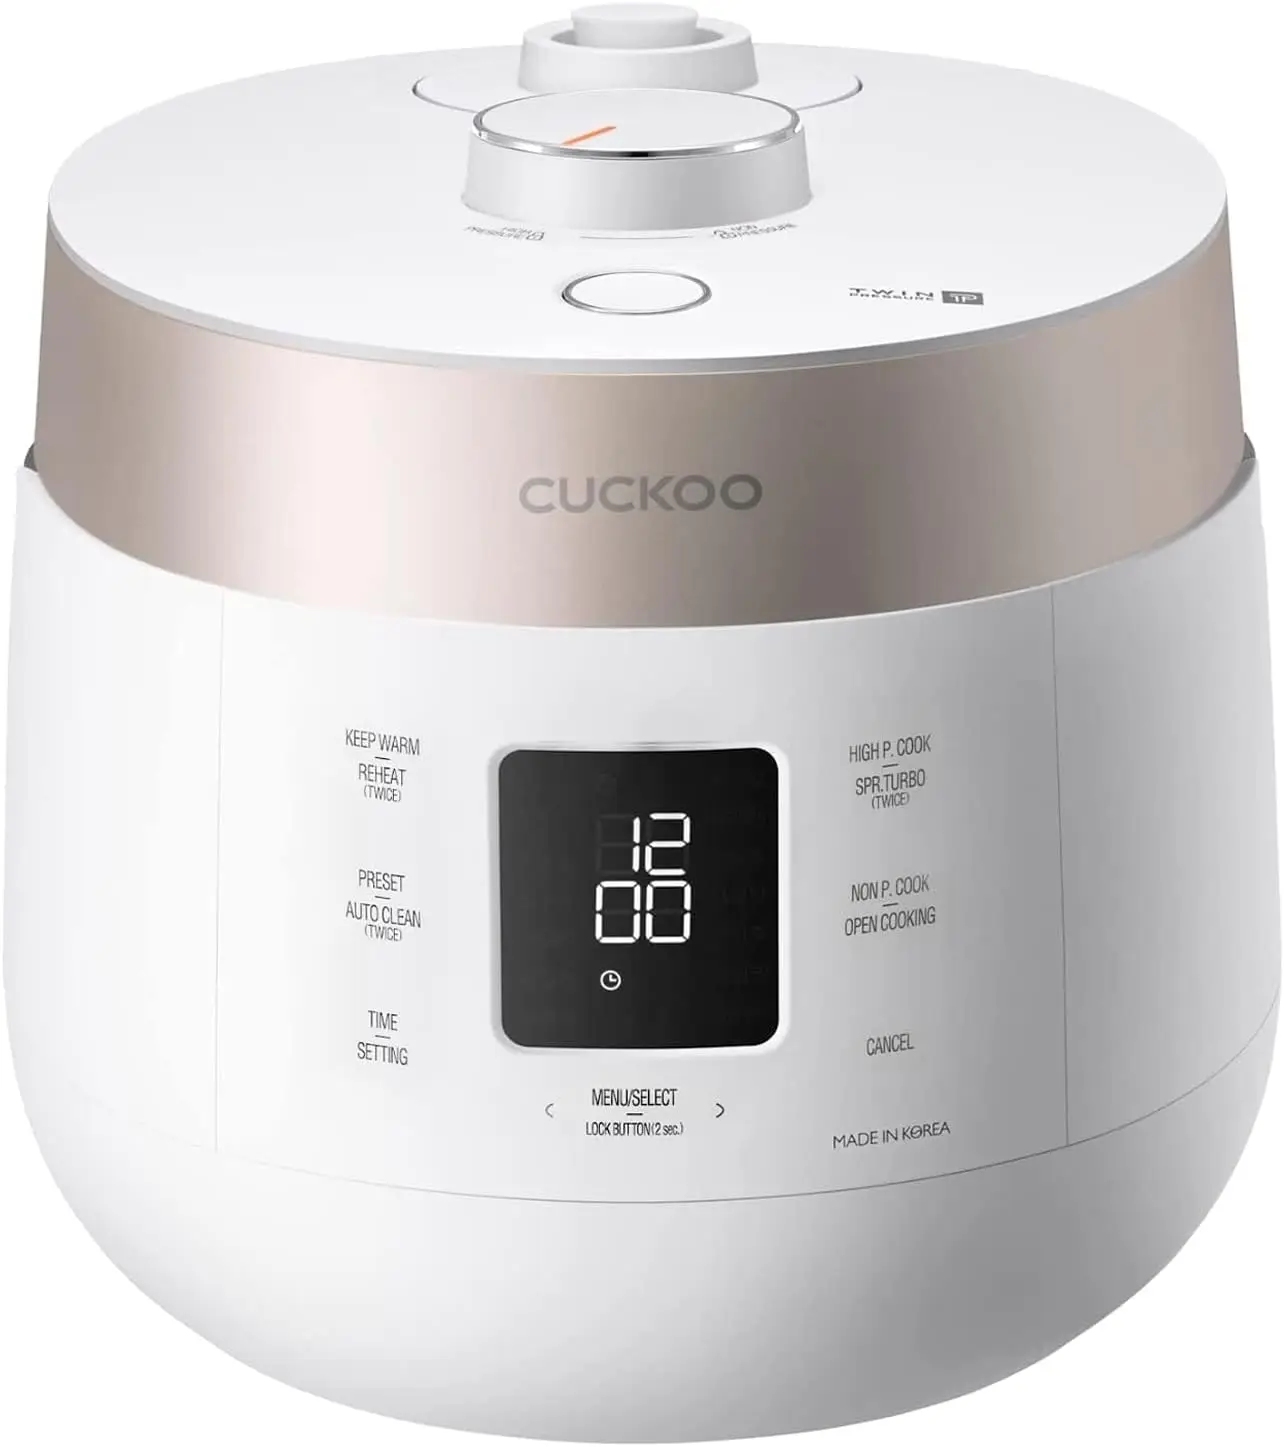 

CUCKOO HP Twin Pressure Rice Cooker 16 Menu Options: White, GABA, Veggie, Porridge, & More, Fuzzy Logic Tech, Energy Saving